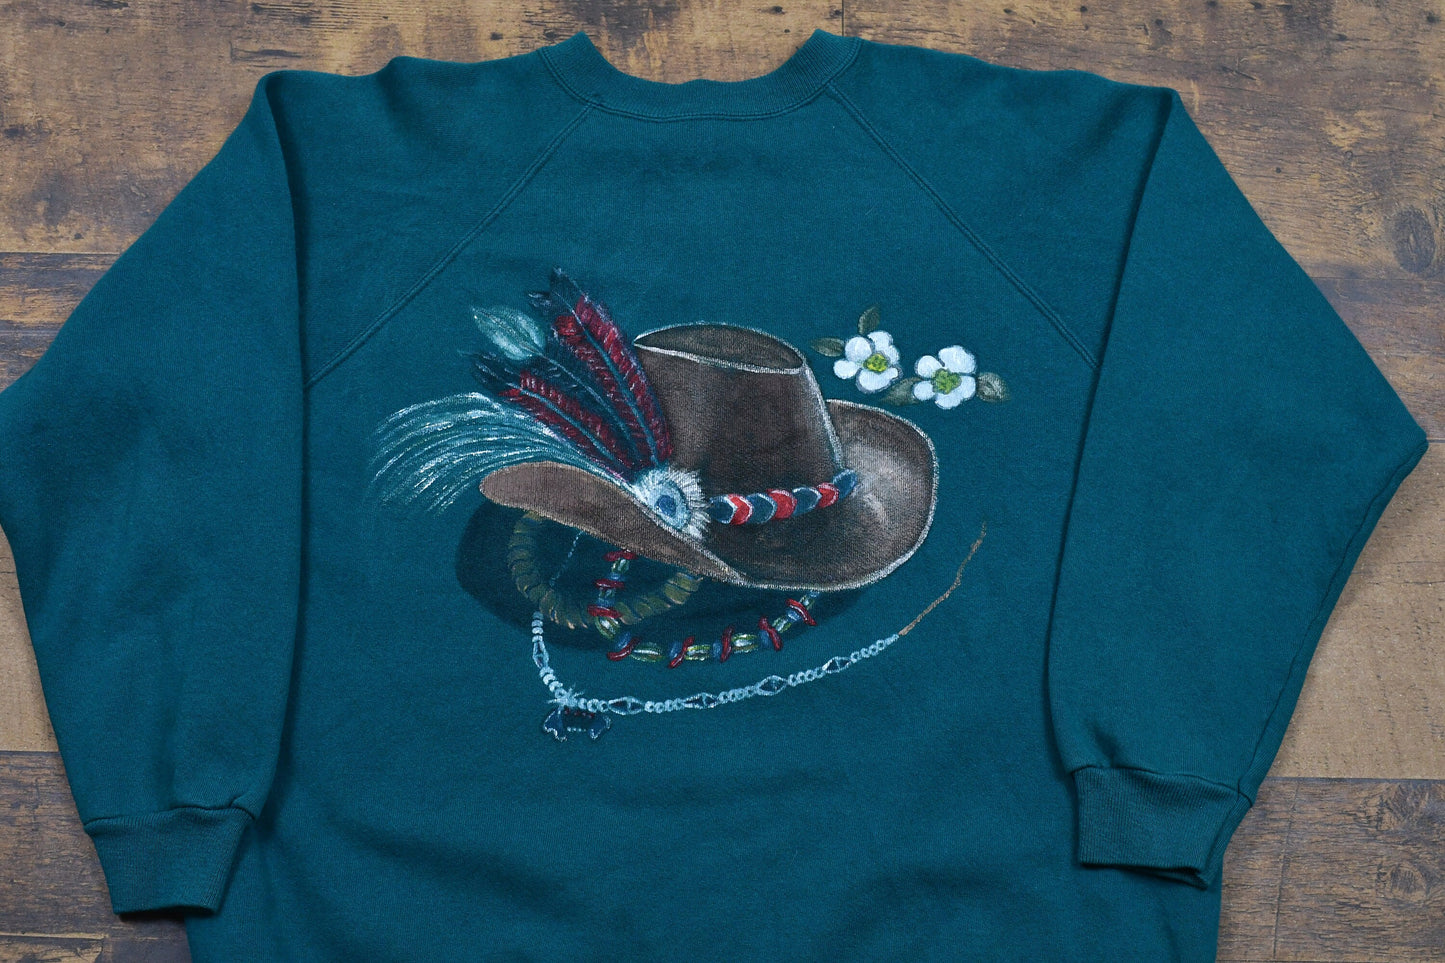 Vintage 1980s Native American Graphic Raglan Crewneck / Earth Tone Sweatshirt / USA Made Materials Pullover Sweatshirt / Hanes Herway